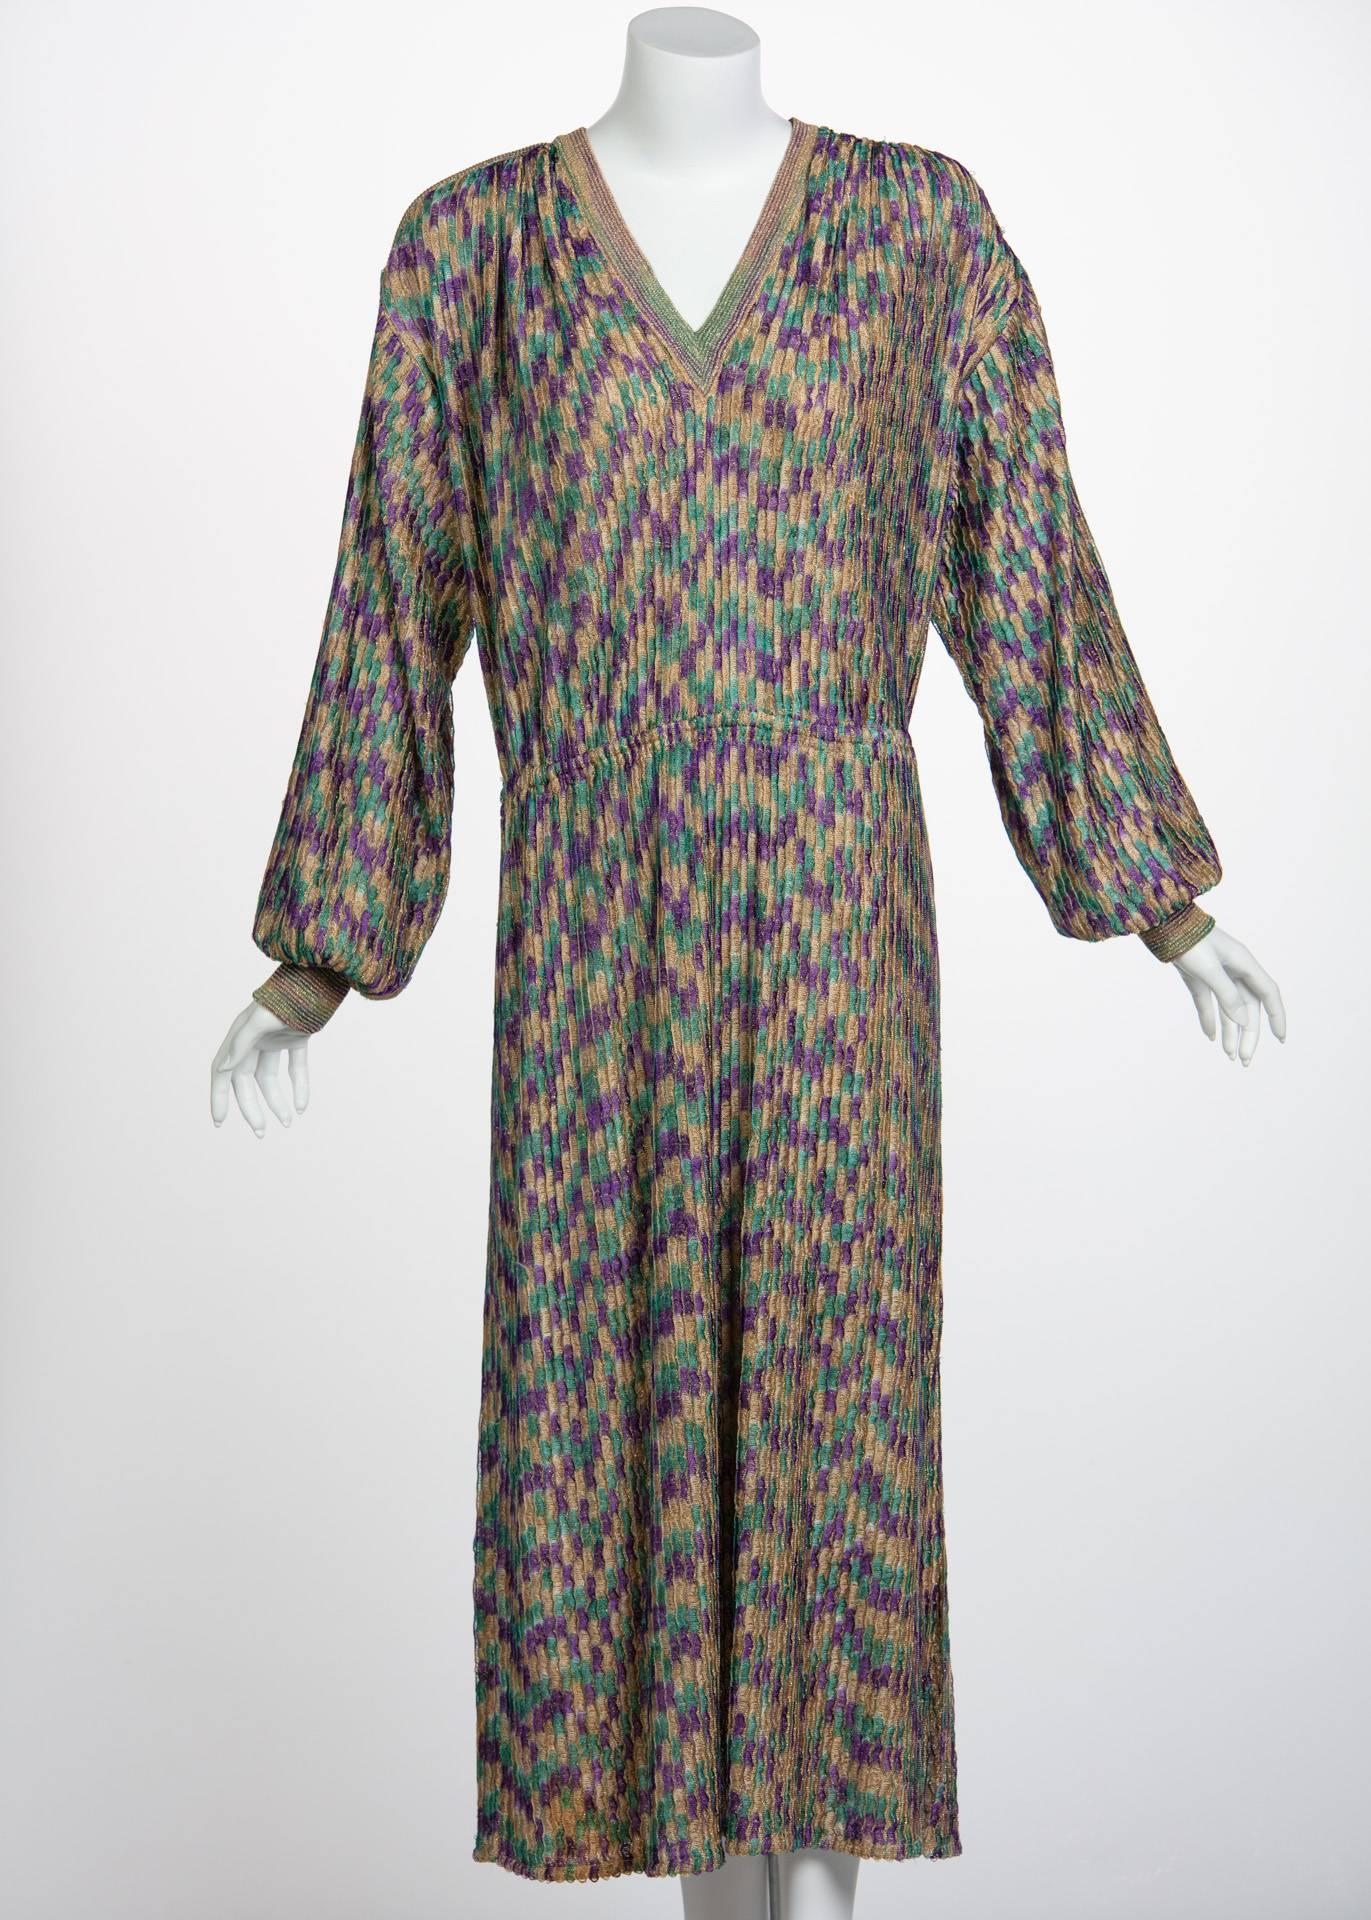 Women's Missoni Multicolored Jewel Tone Metallic Knit Belted Dress, 1970s  For Sale